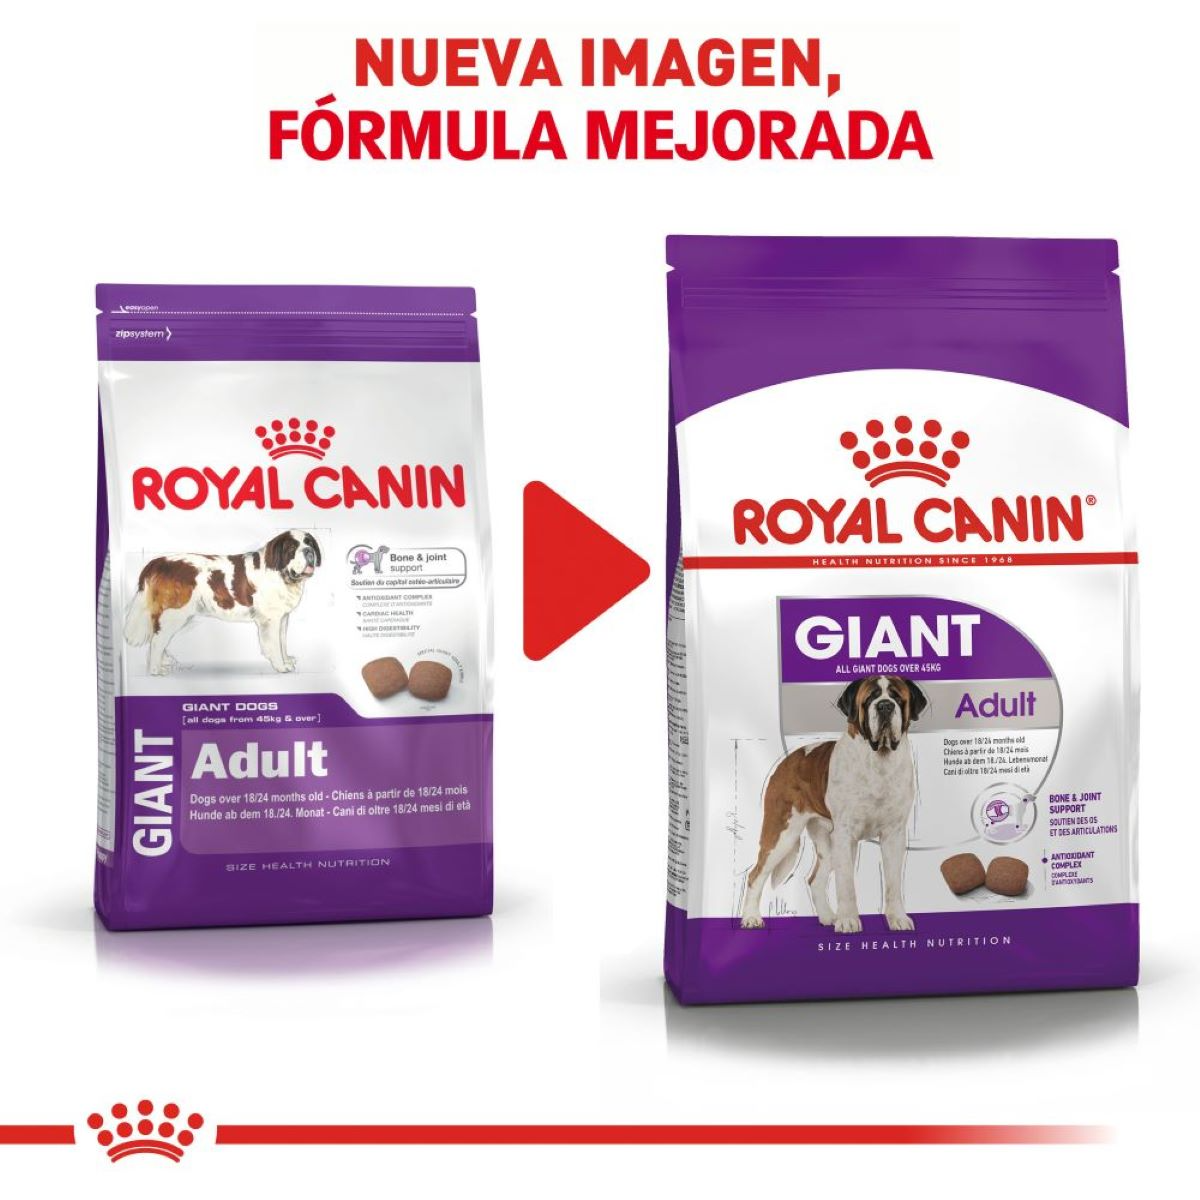 Royal Canin Giant Adult, Alimento para Perro, perro, Royal Canin, Mister Mascotas